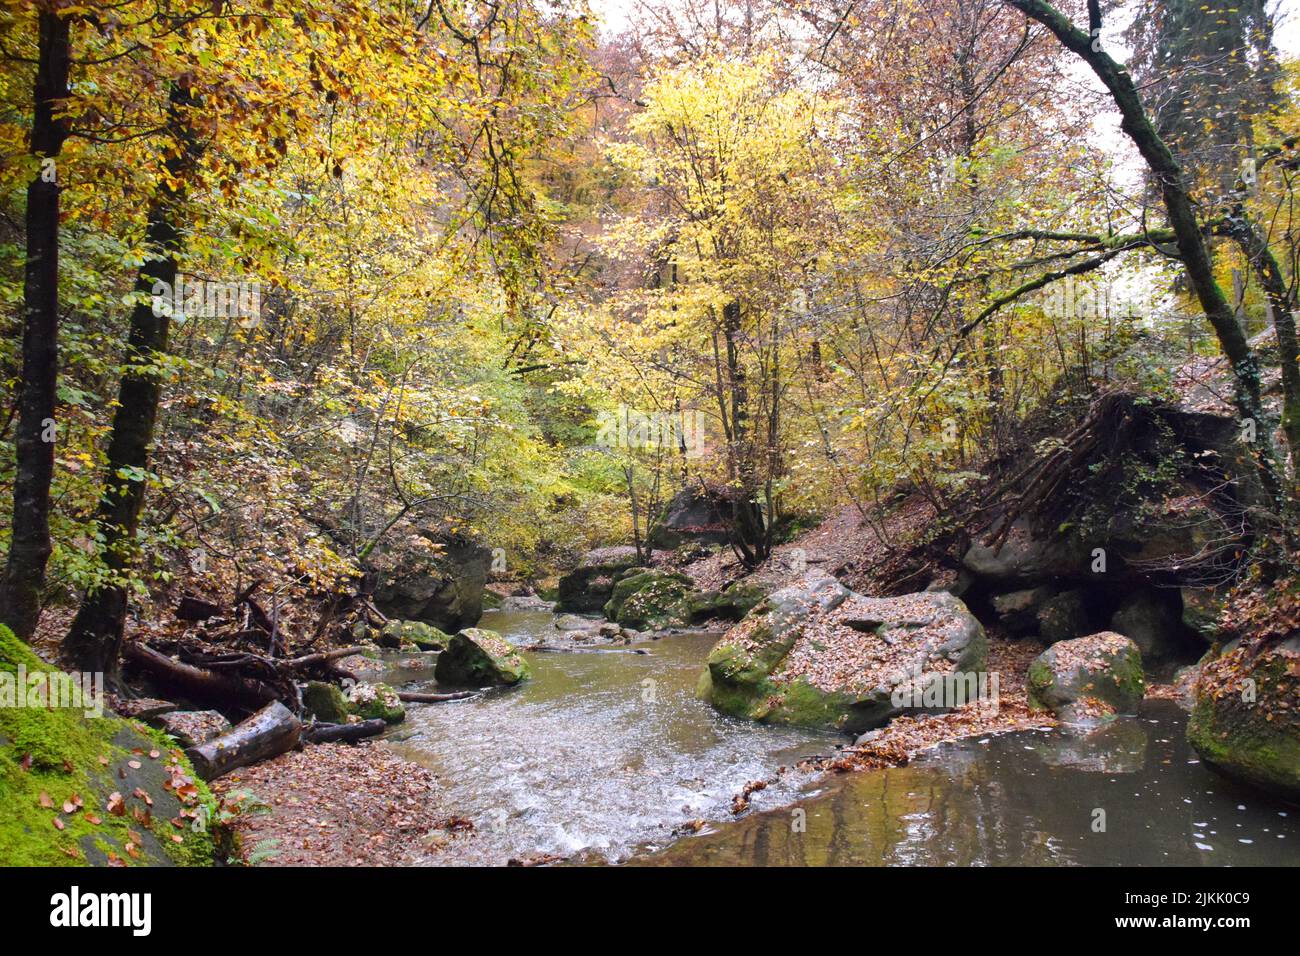 A beautiful landscape of a stream in a dense forest in Eifel region, Germany Stock Photo